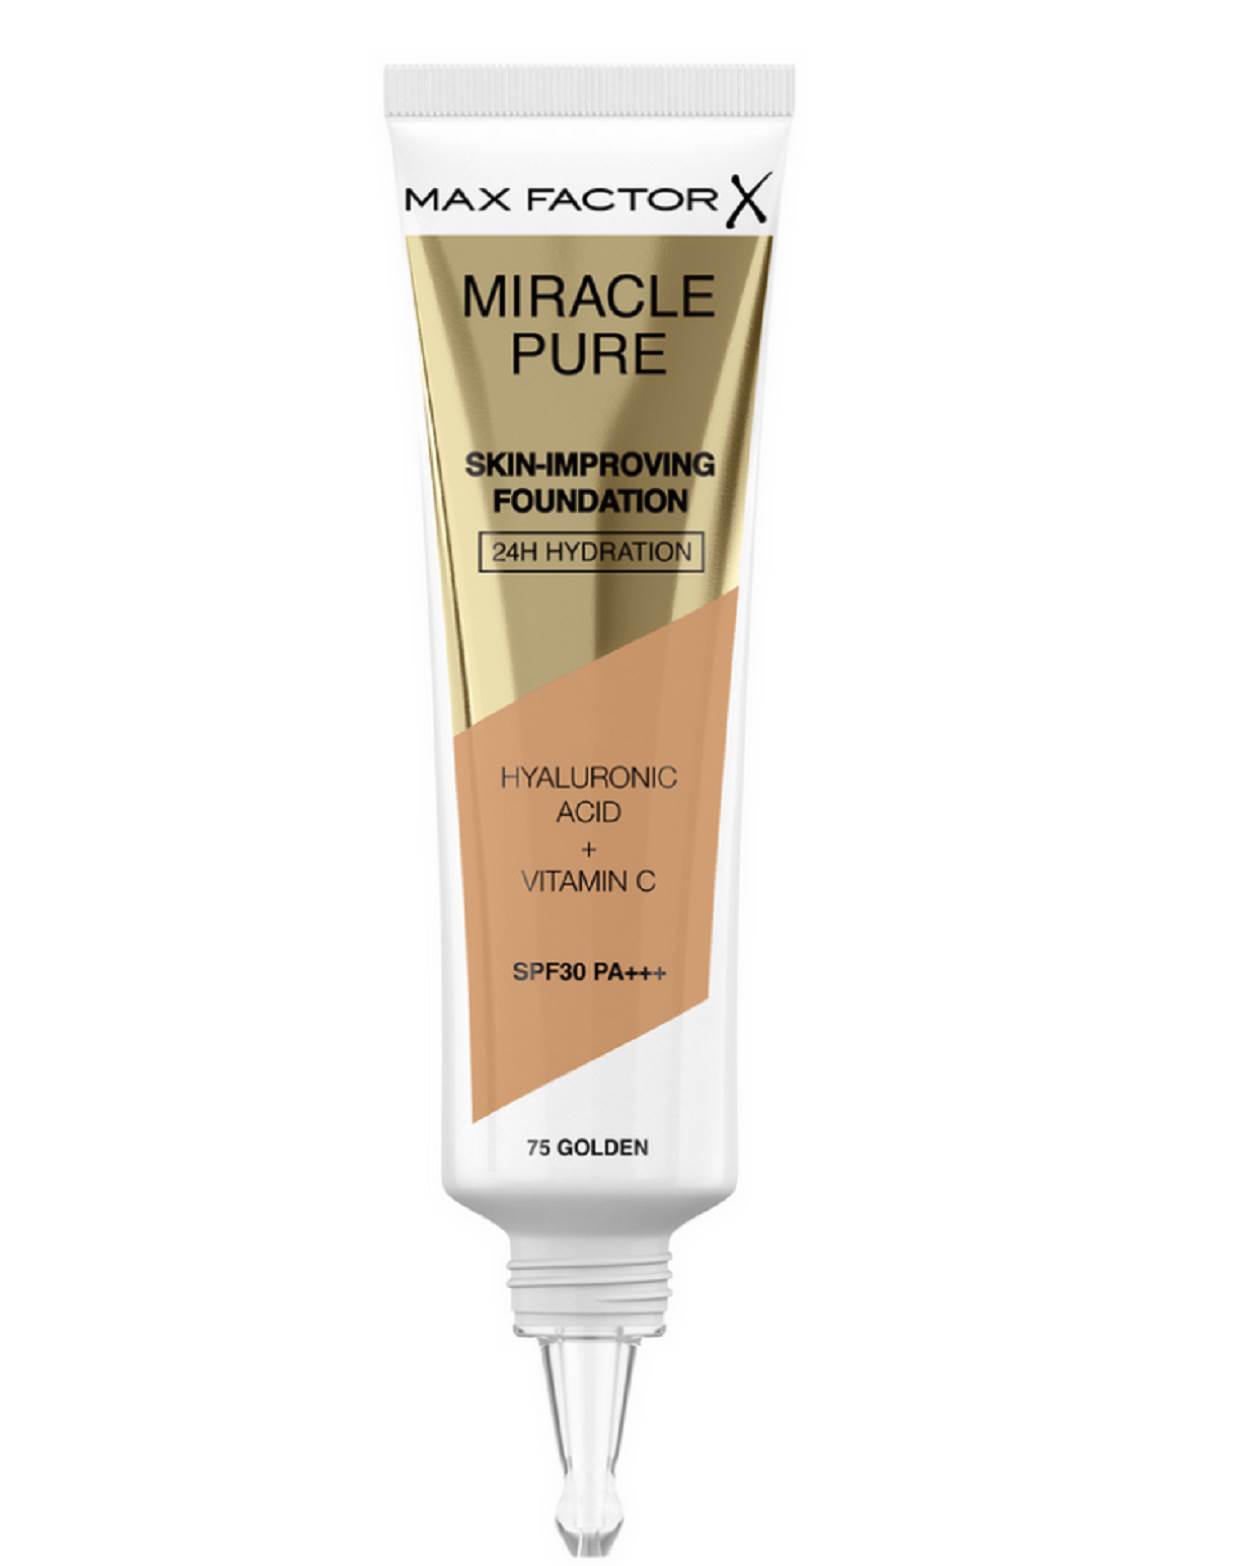  Max Factor Miracle Pure puder neguje kožu. 